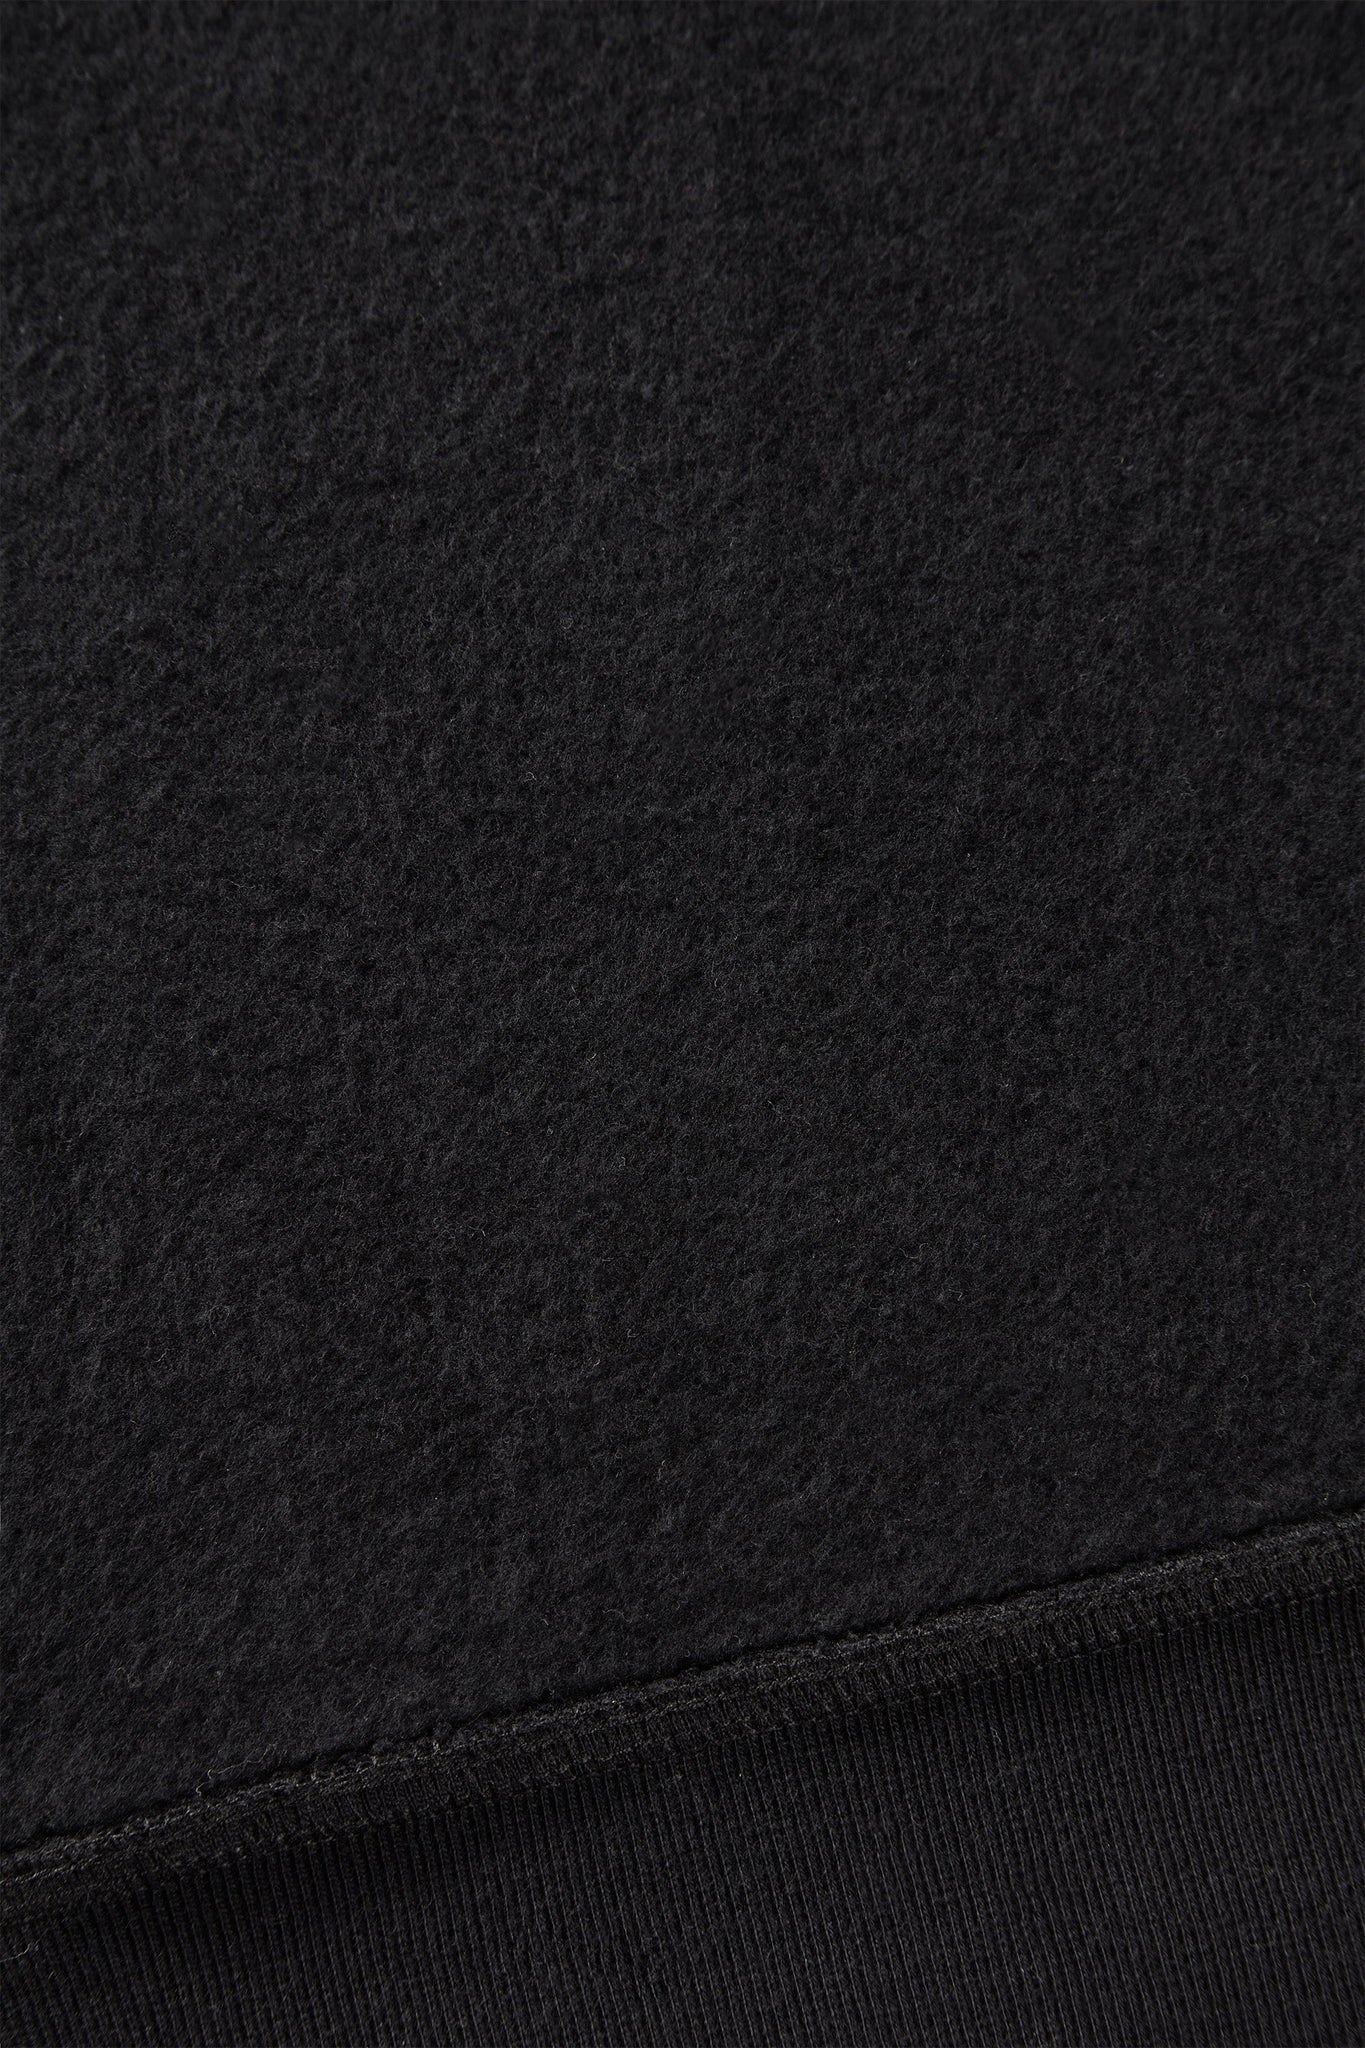 alt="detail of black hooded sweatshirt cotton brushed on the inside"